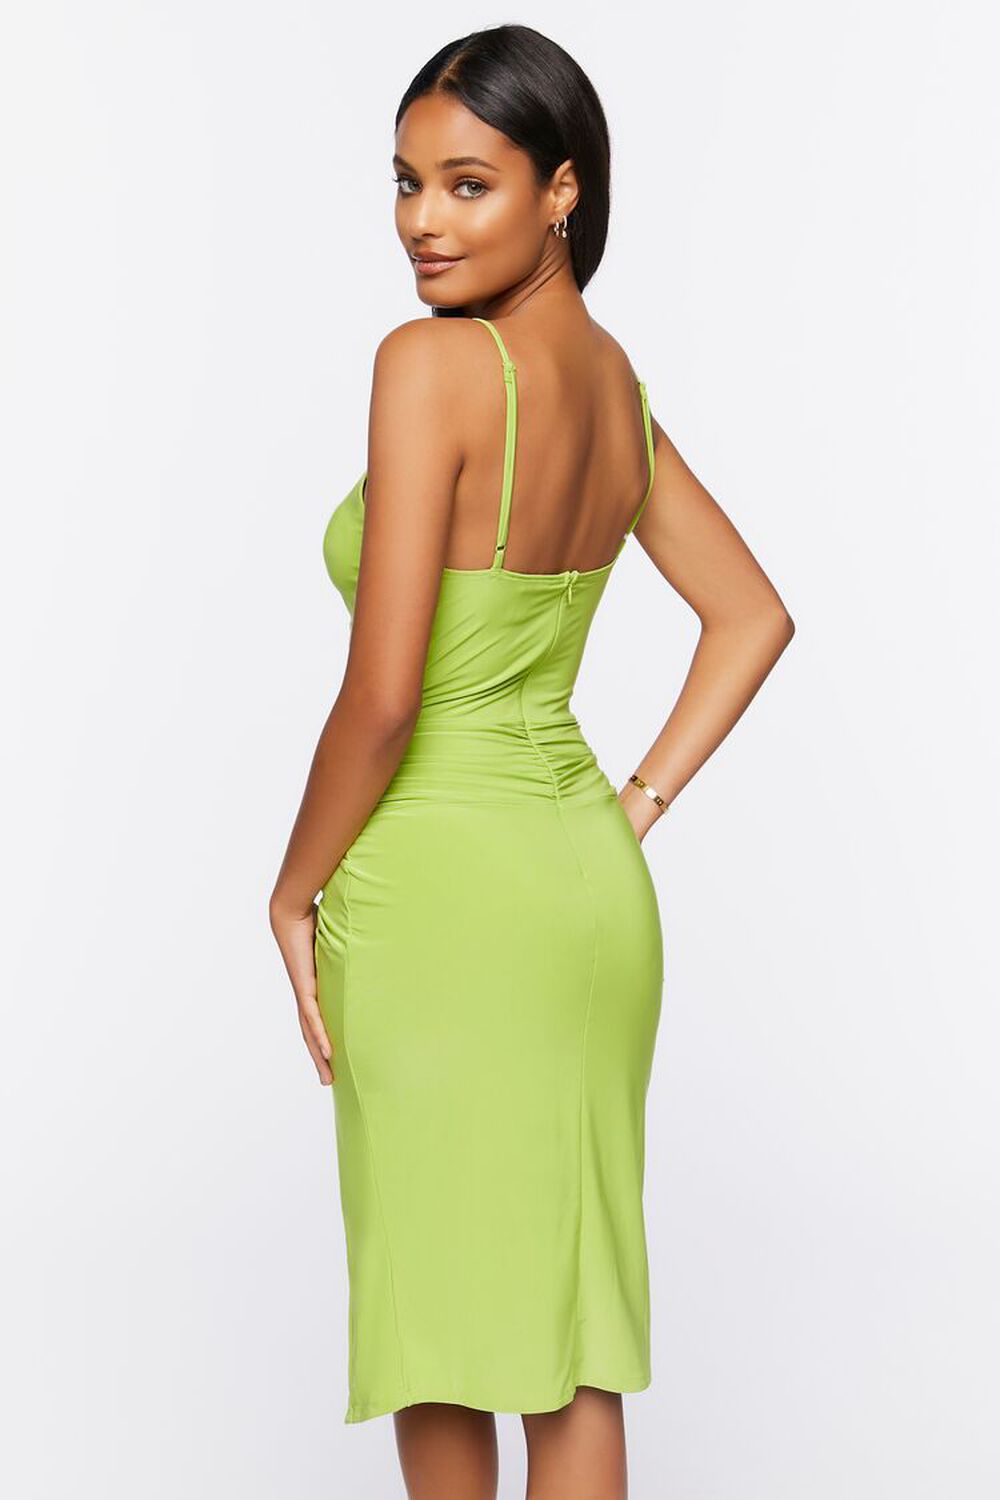 GREEN APPLE Cutout O-Ring Cami Dress, image 3